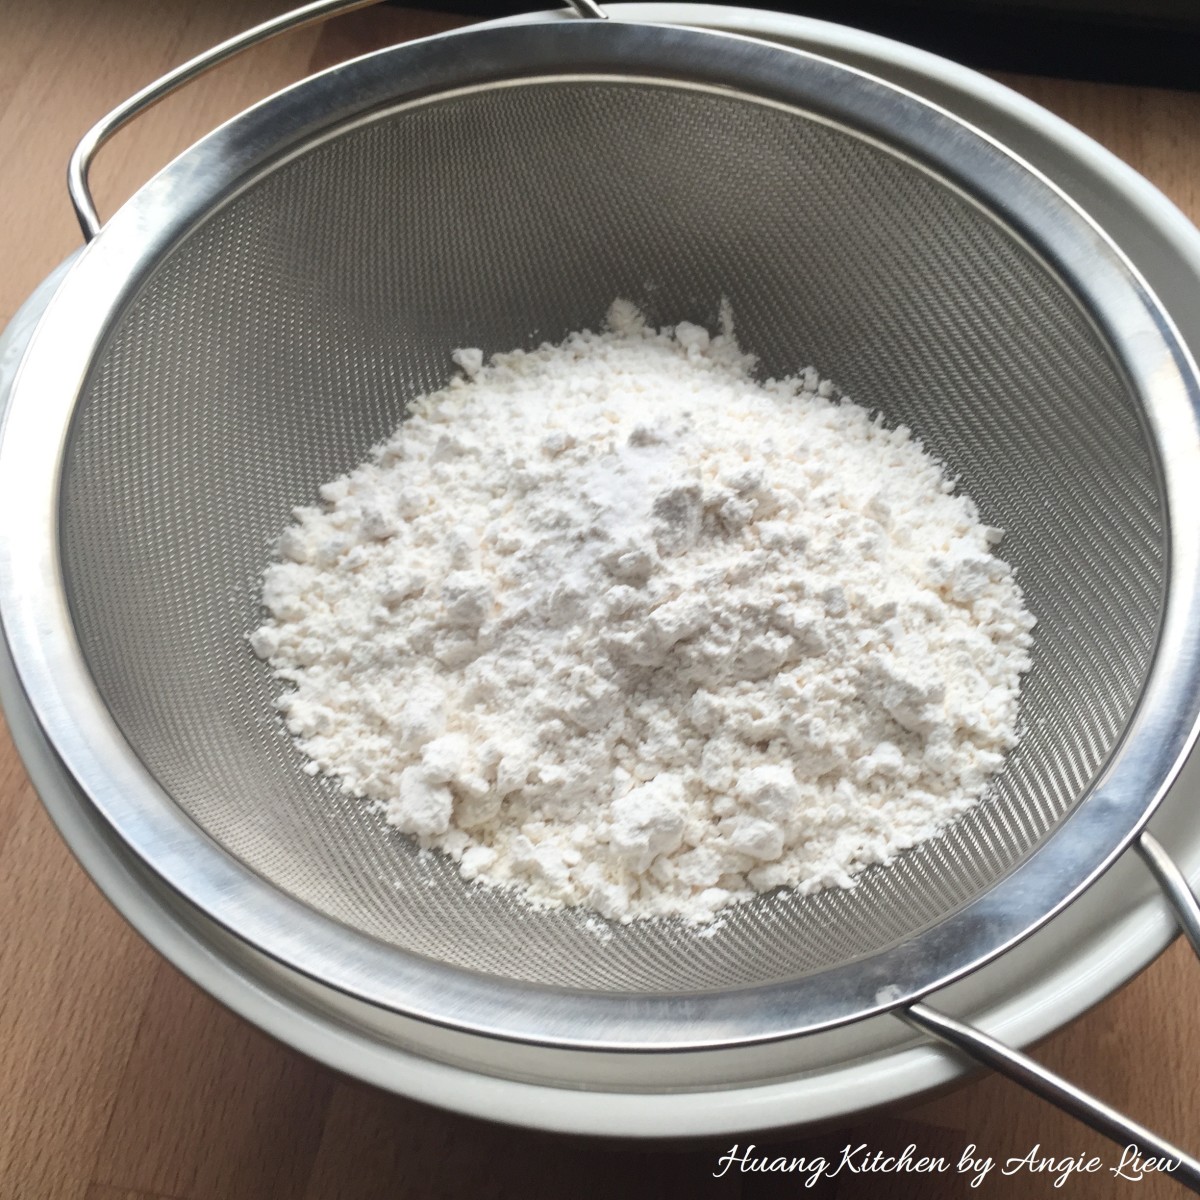 Dainty Pineapple Tarts - sieve flour